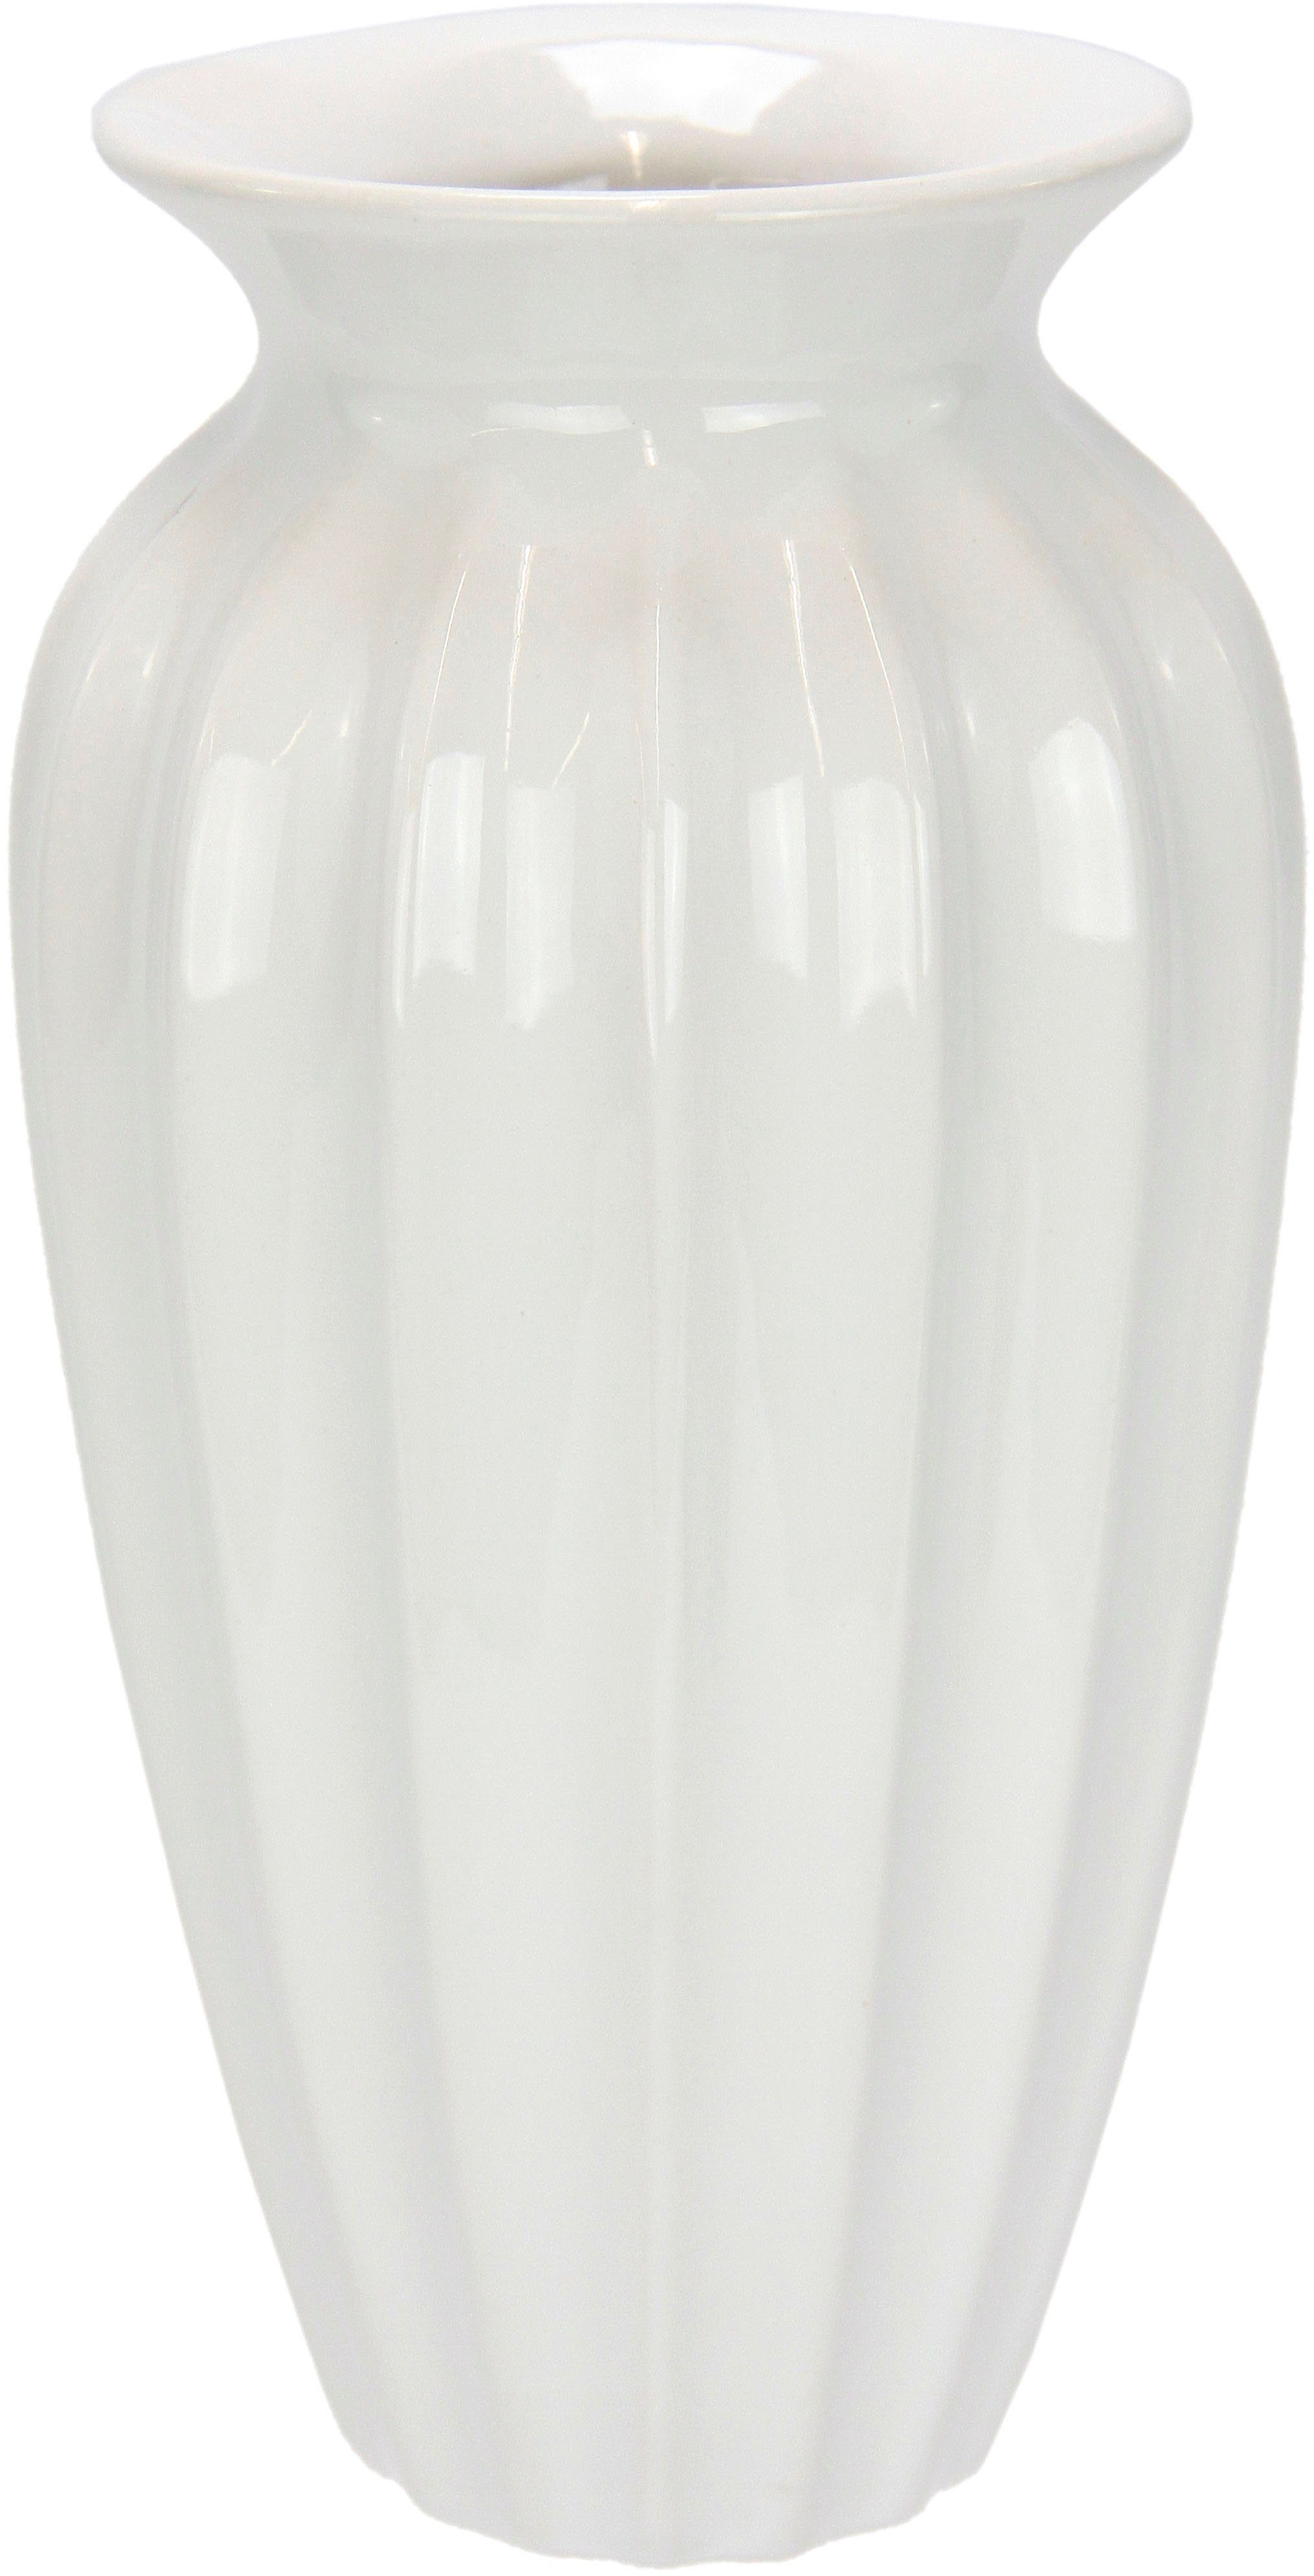 I.GE.A. Dekovase Keramik Vase, rund Aus groß Keramik